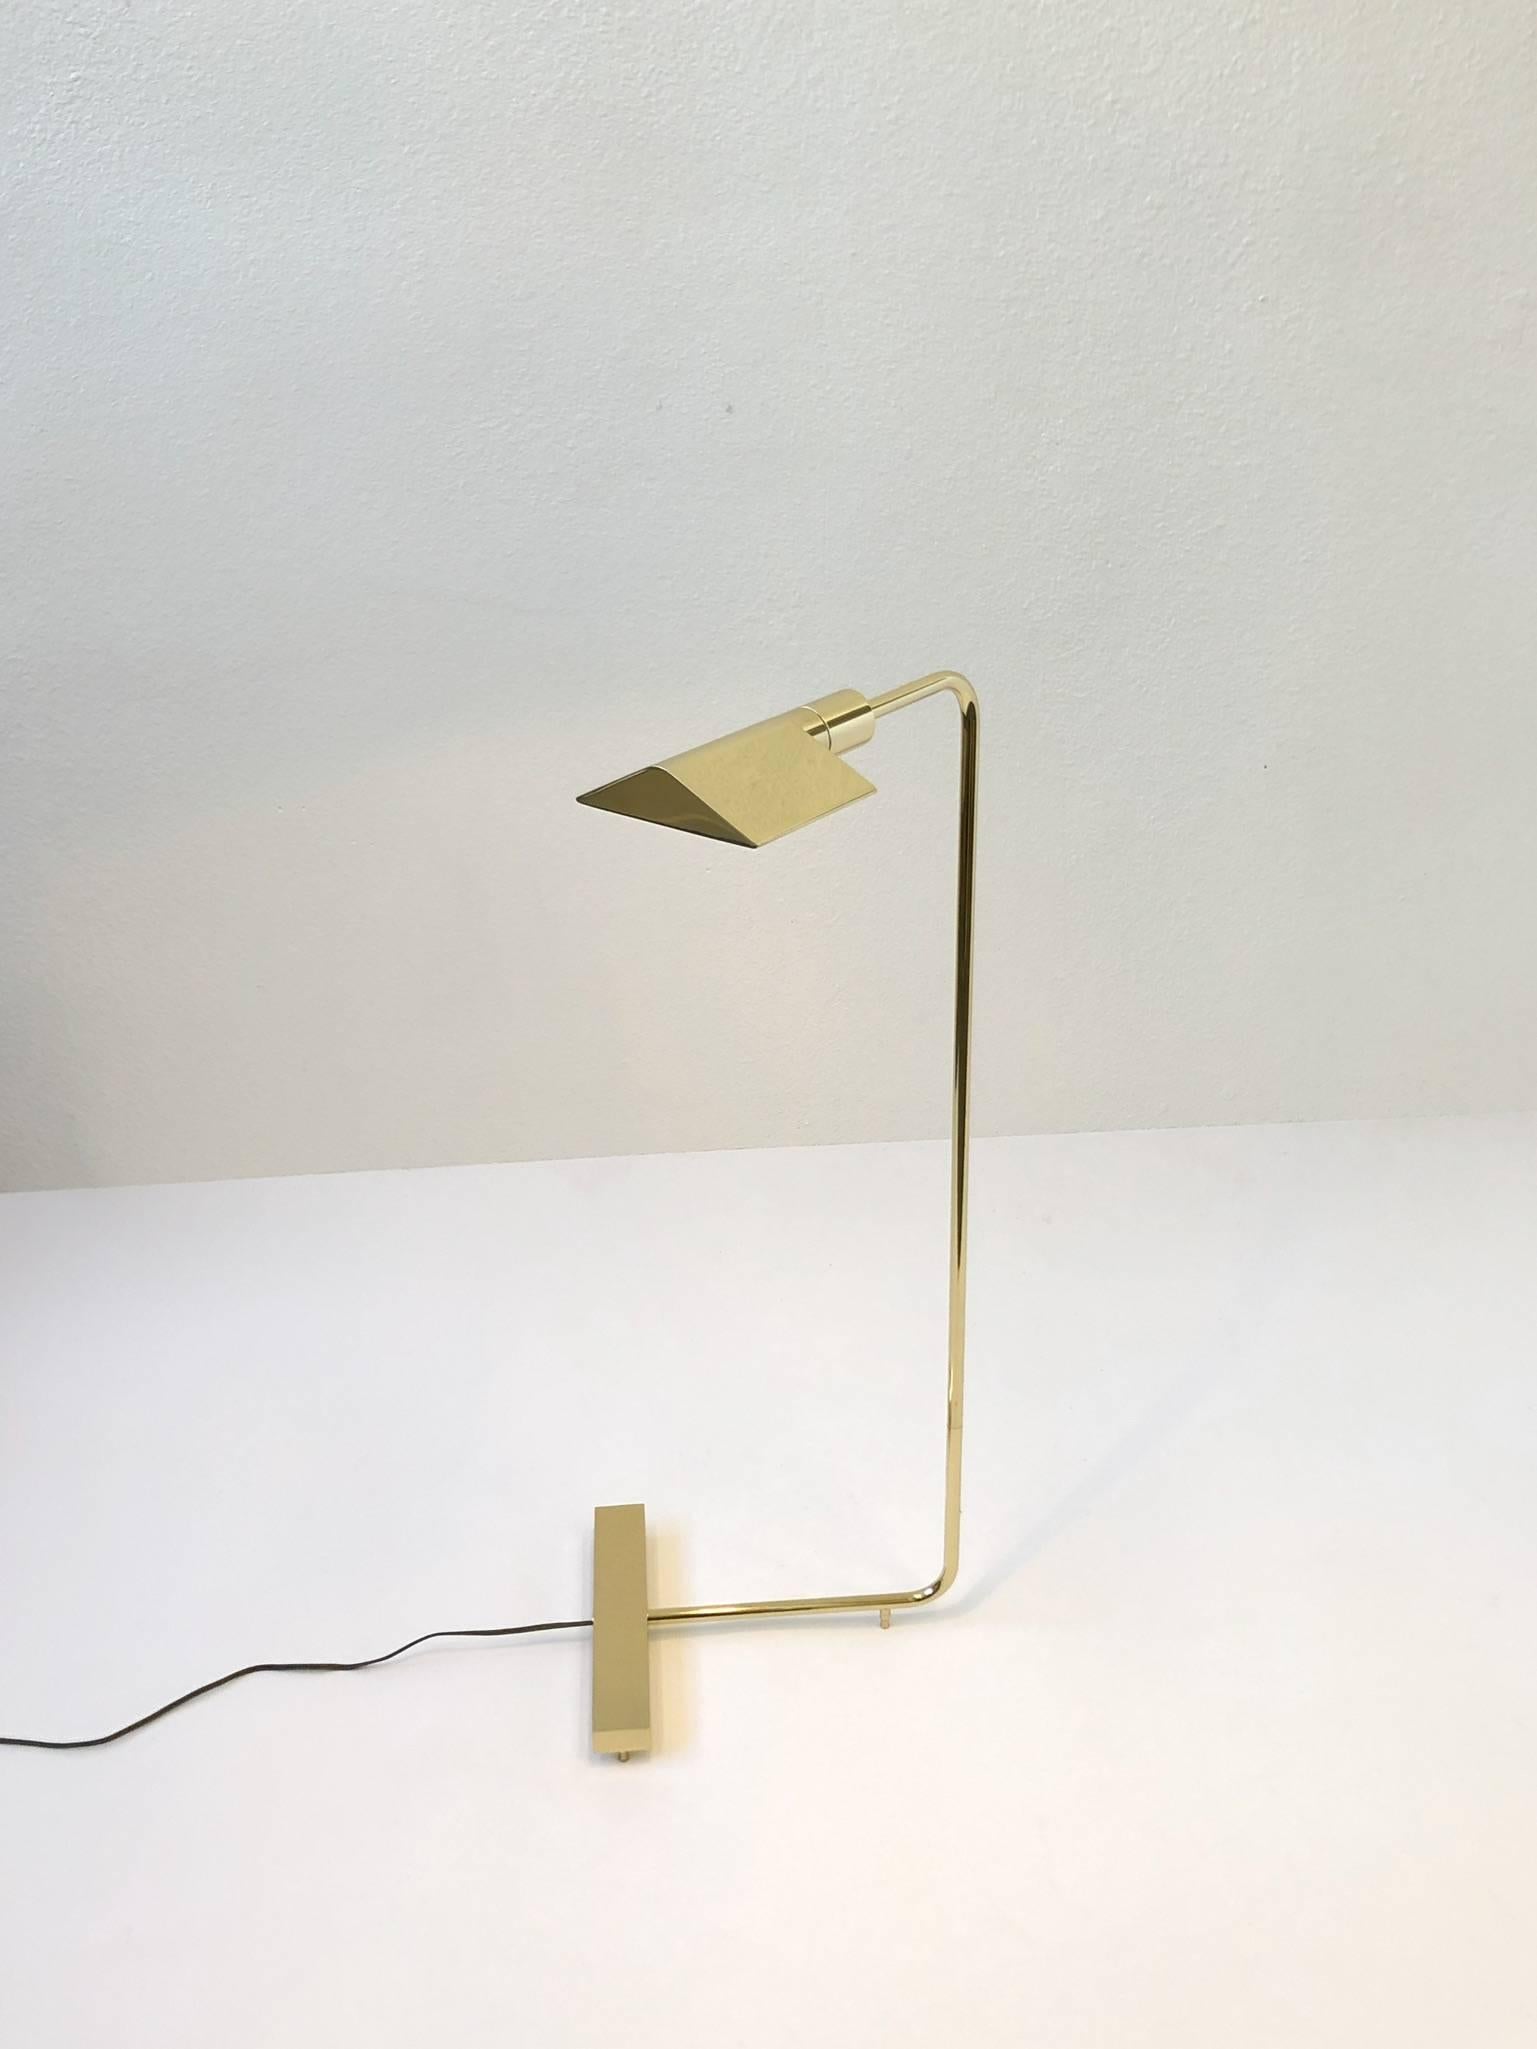 American Polish Brass Adjustable Floor Lamp by Cedric Hartman